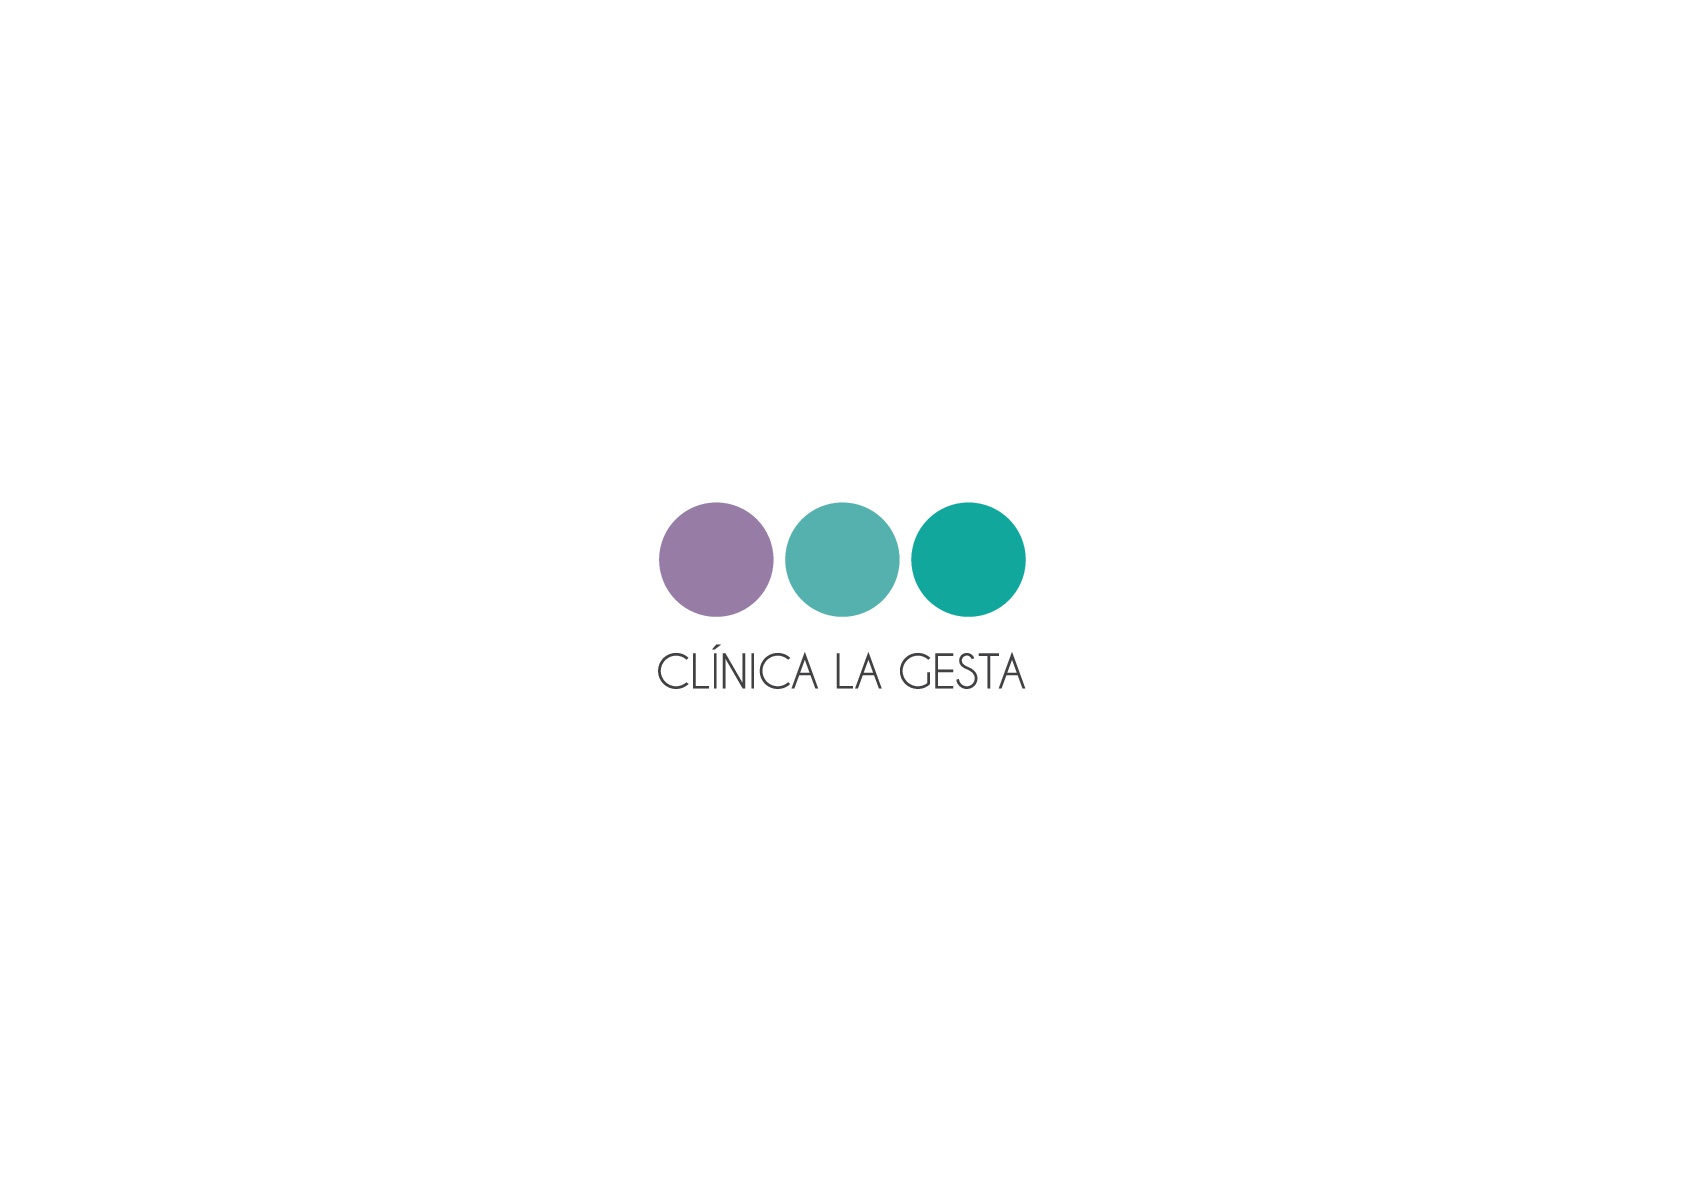 CLINICA LA GESTA _logo-001